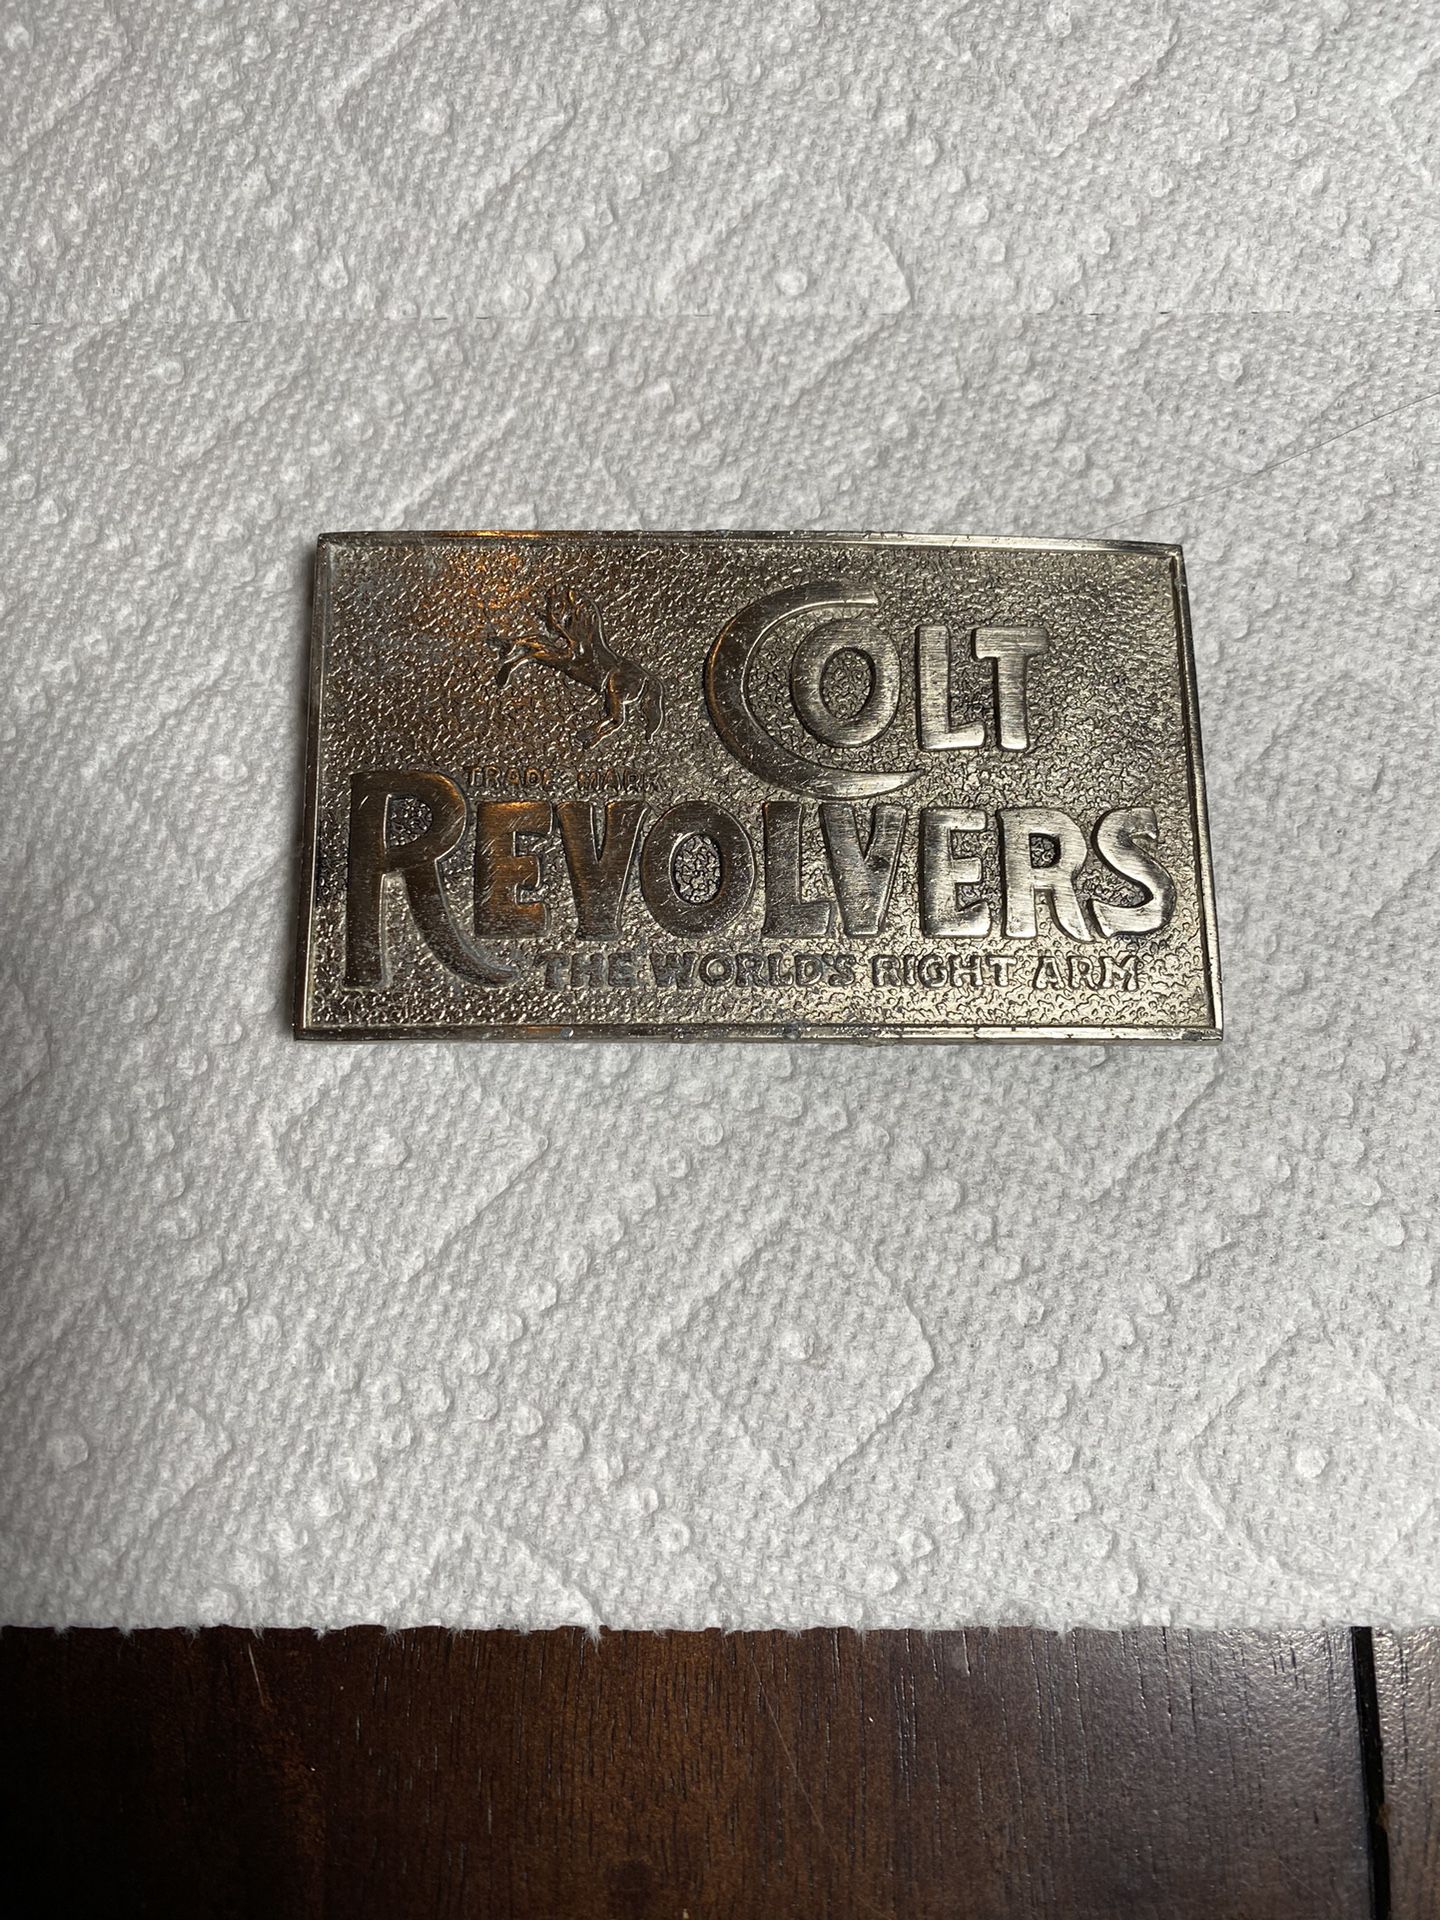 Colt Revolvers Brass Belt Buckle